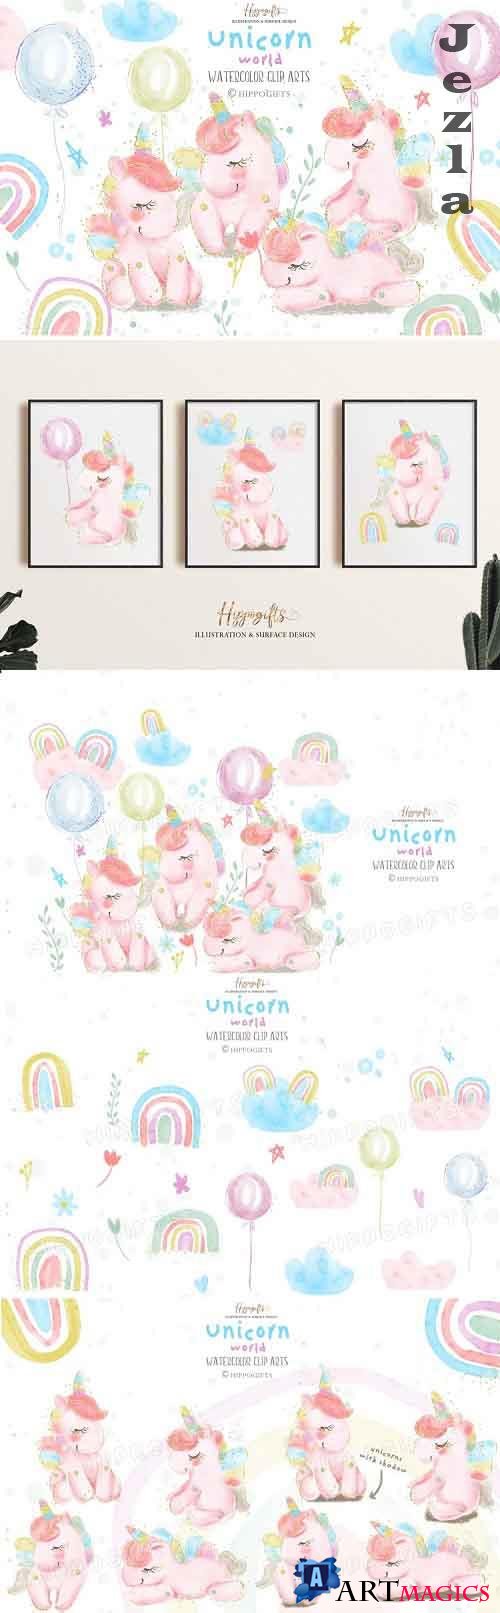 Watercolor unicorn illustrations - 572804